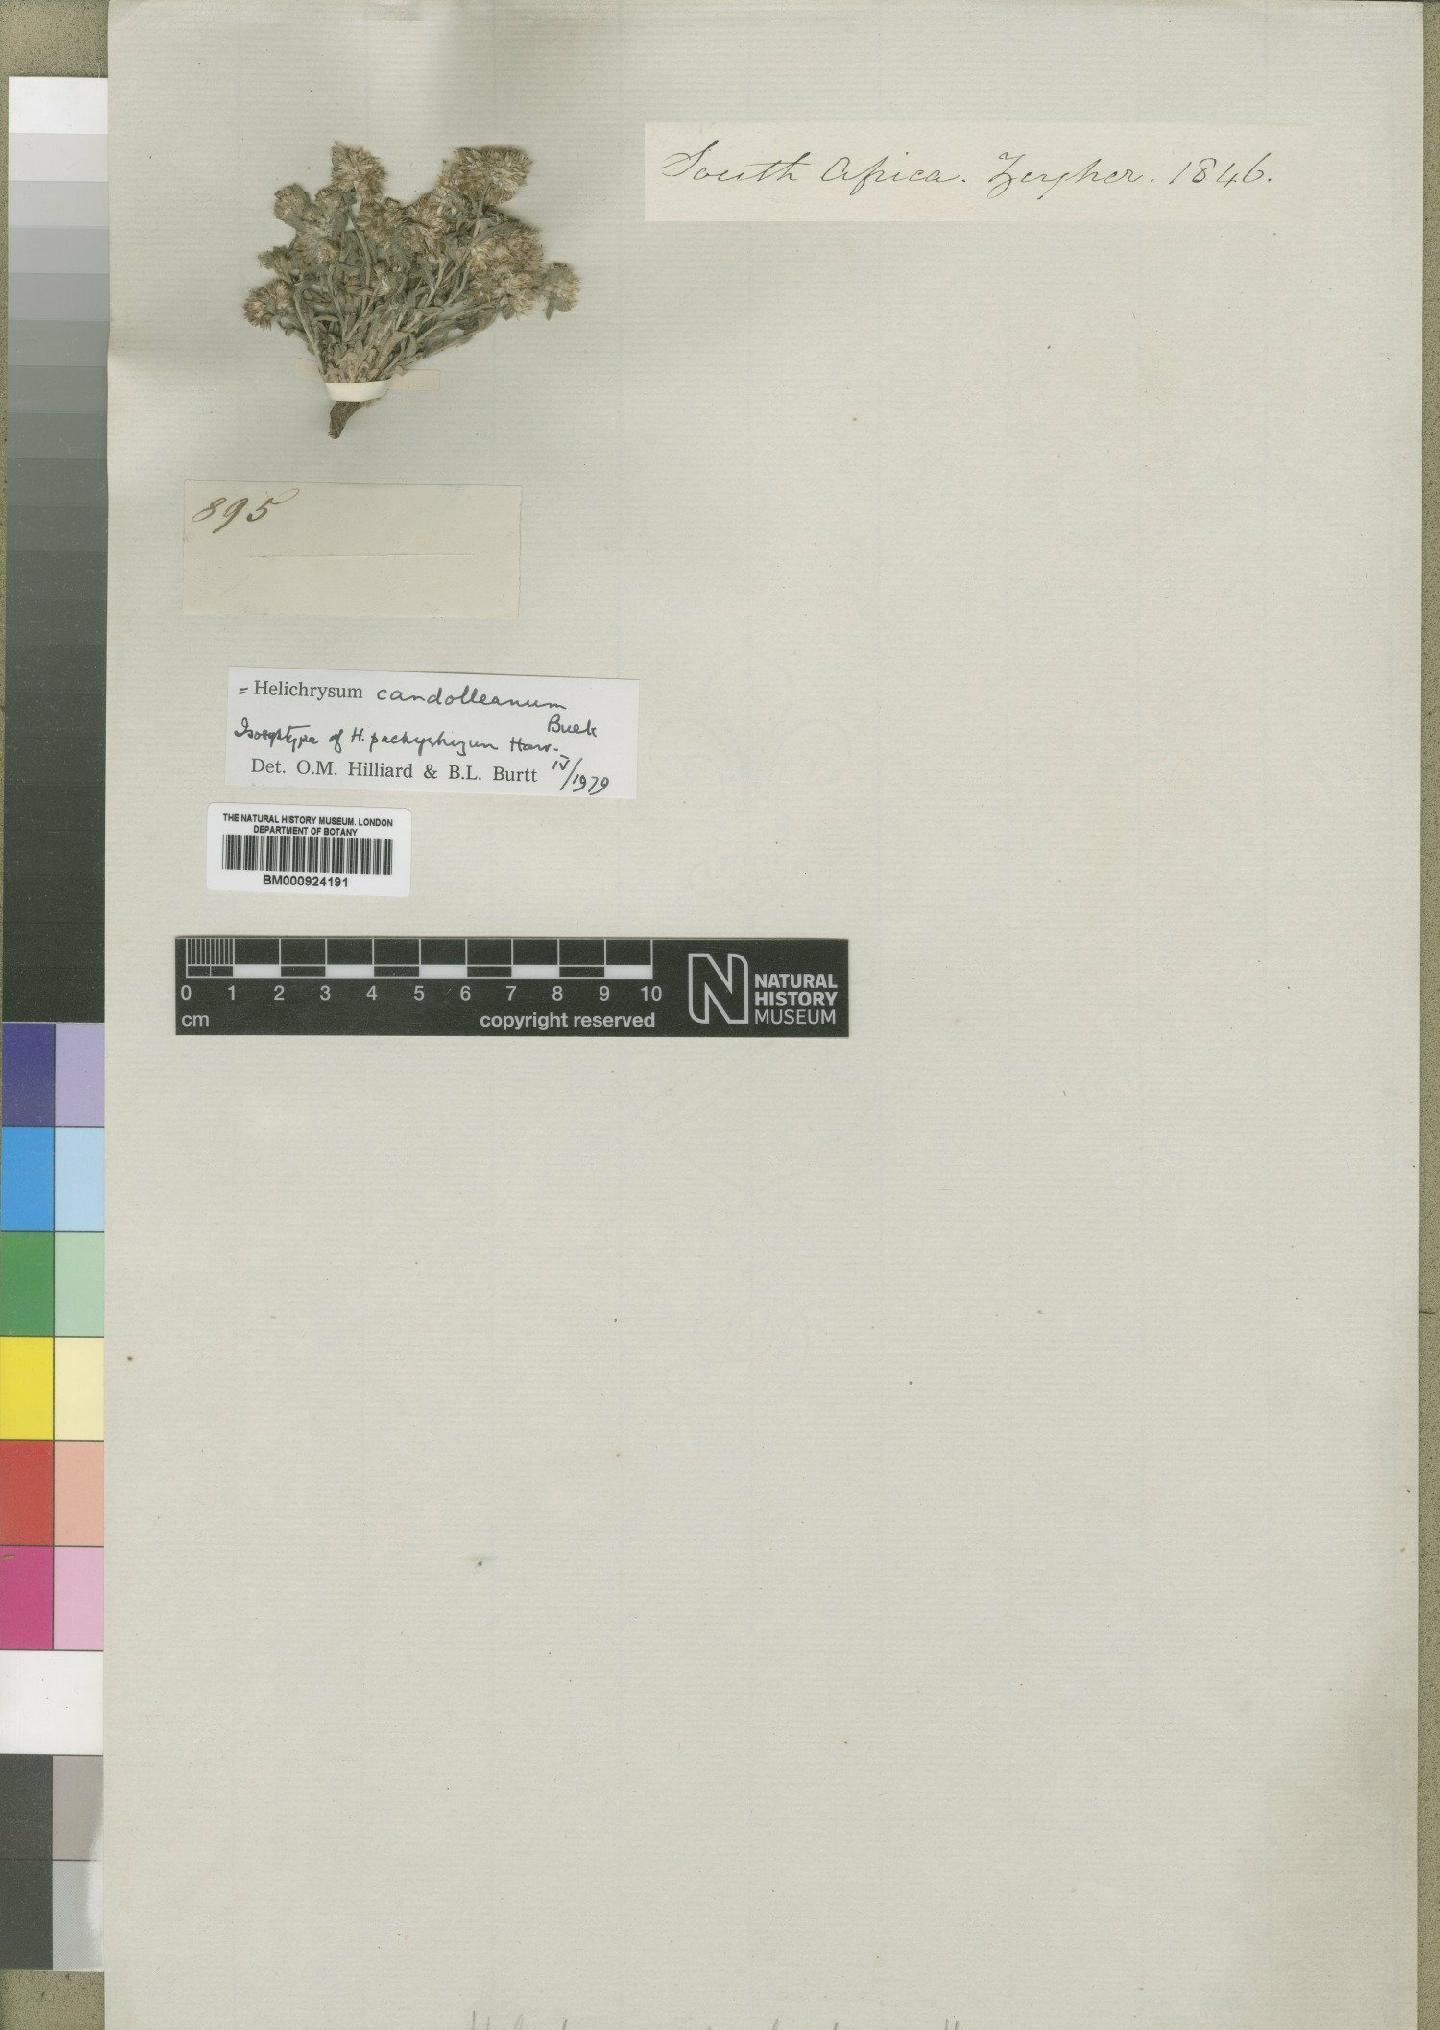 To NHMUK collection (Helichrysum candolleanum Buek; Isosyntype; NHMUK:ecatalogue:4529219)